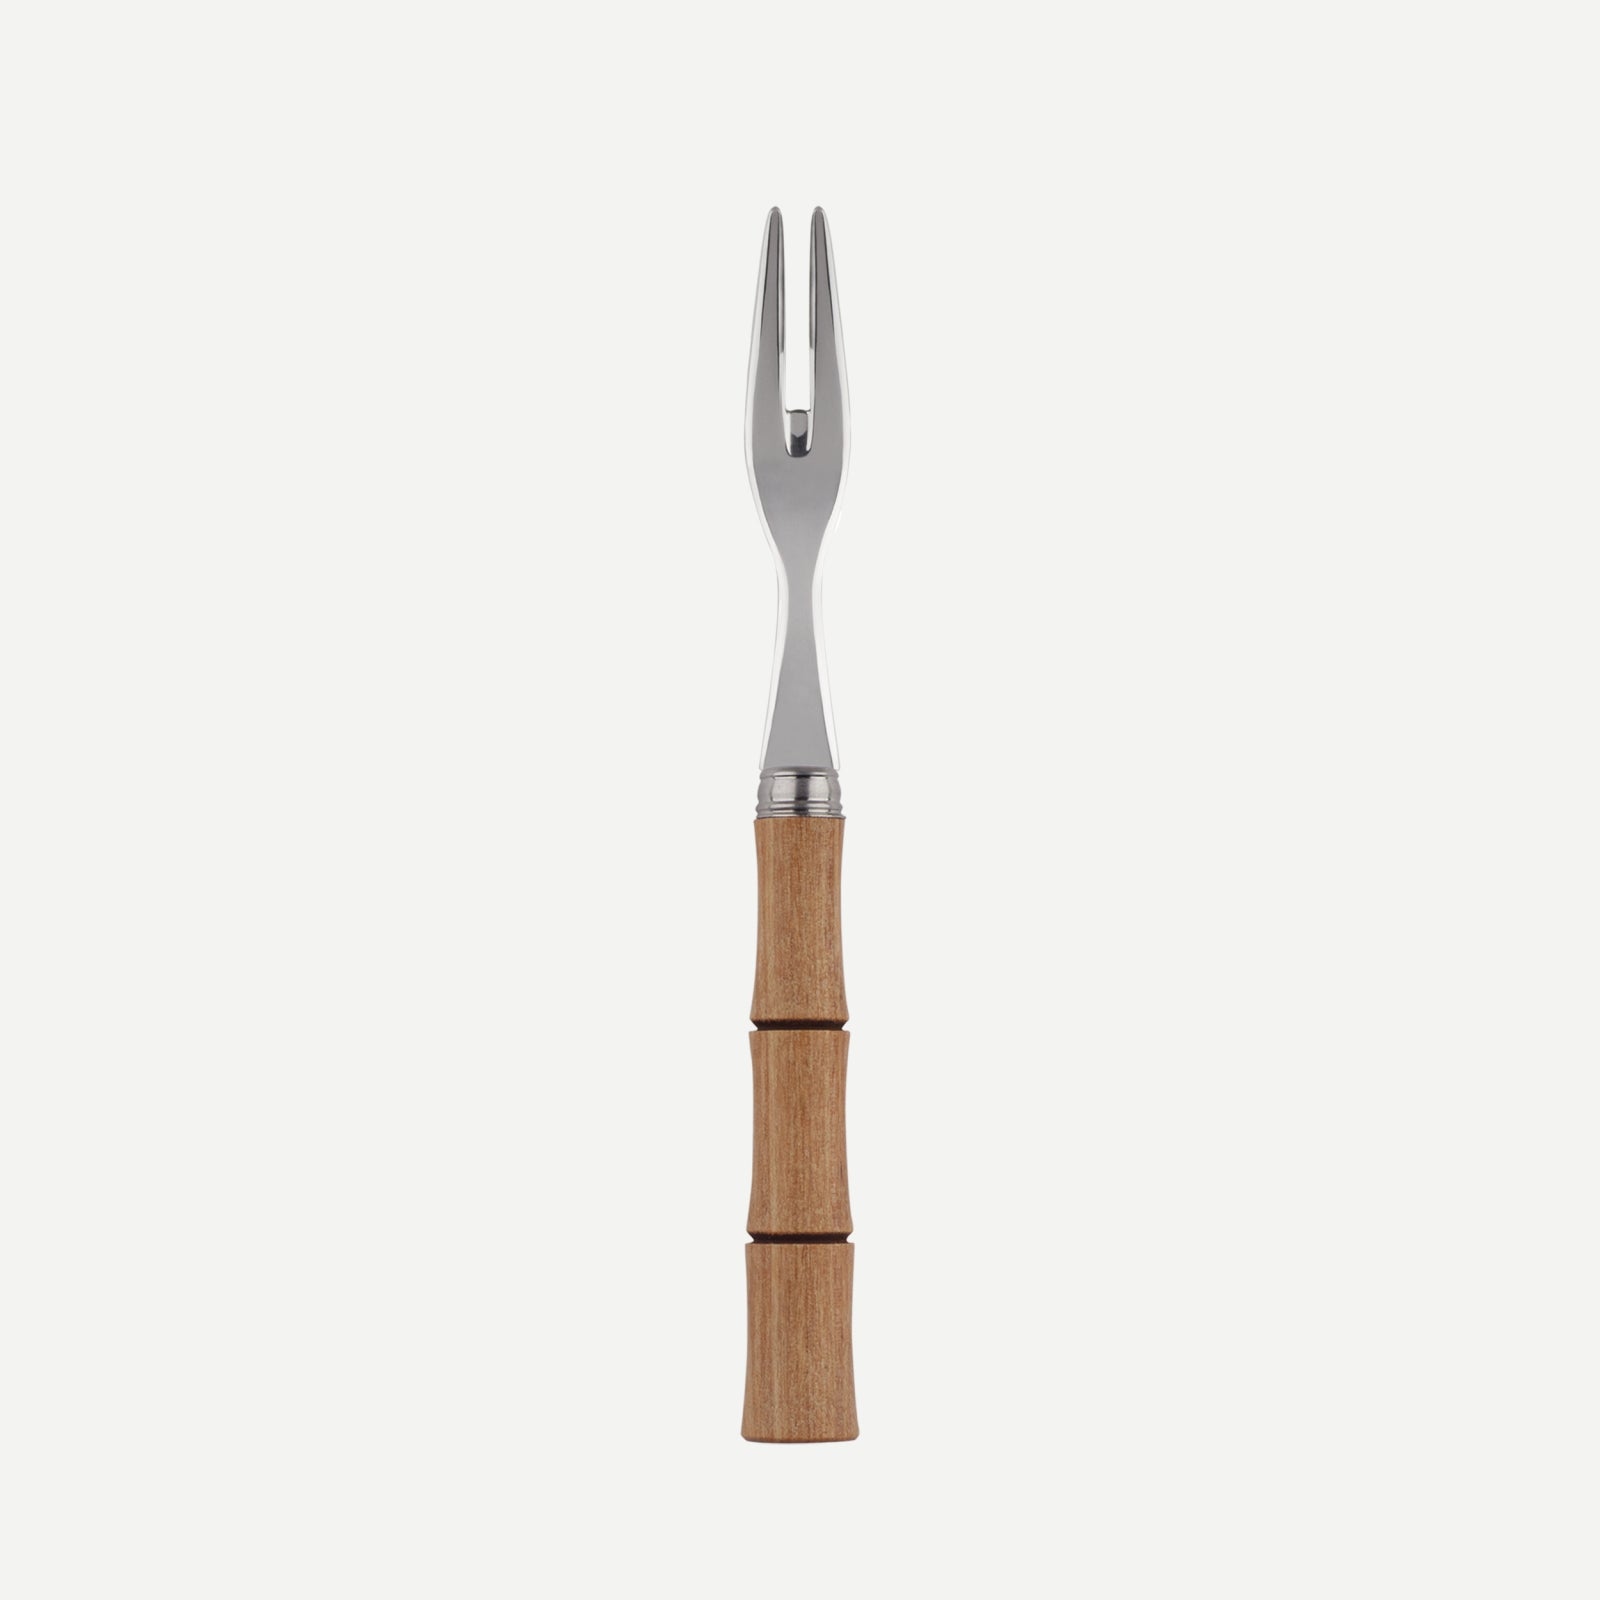 Cocktail fork - Bamboo - Light press wood